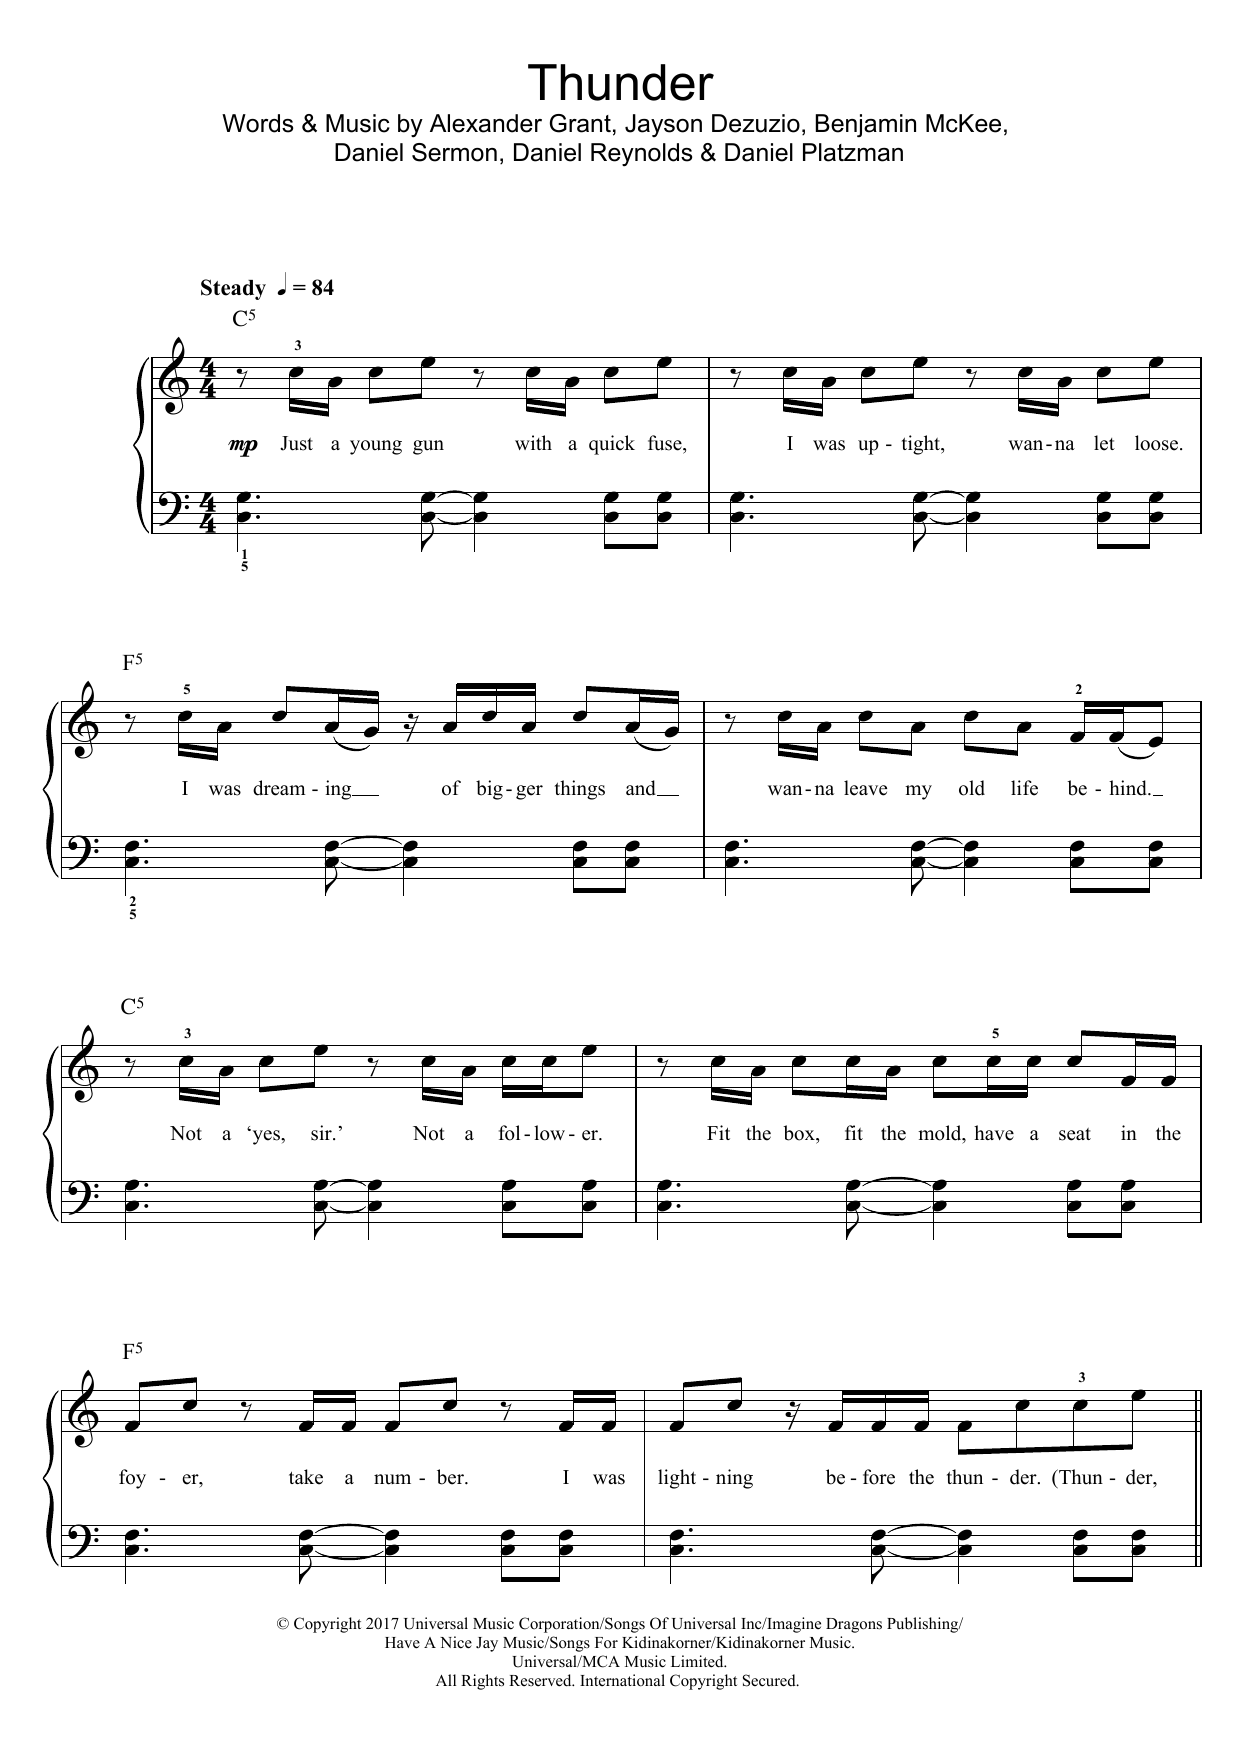 Imagine Dragons Thunder Sheet Music Notes & Chords for Melody Line, Lyrics & Chords - Download or Print PDF